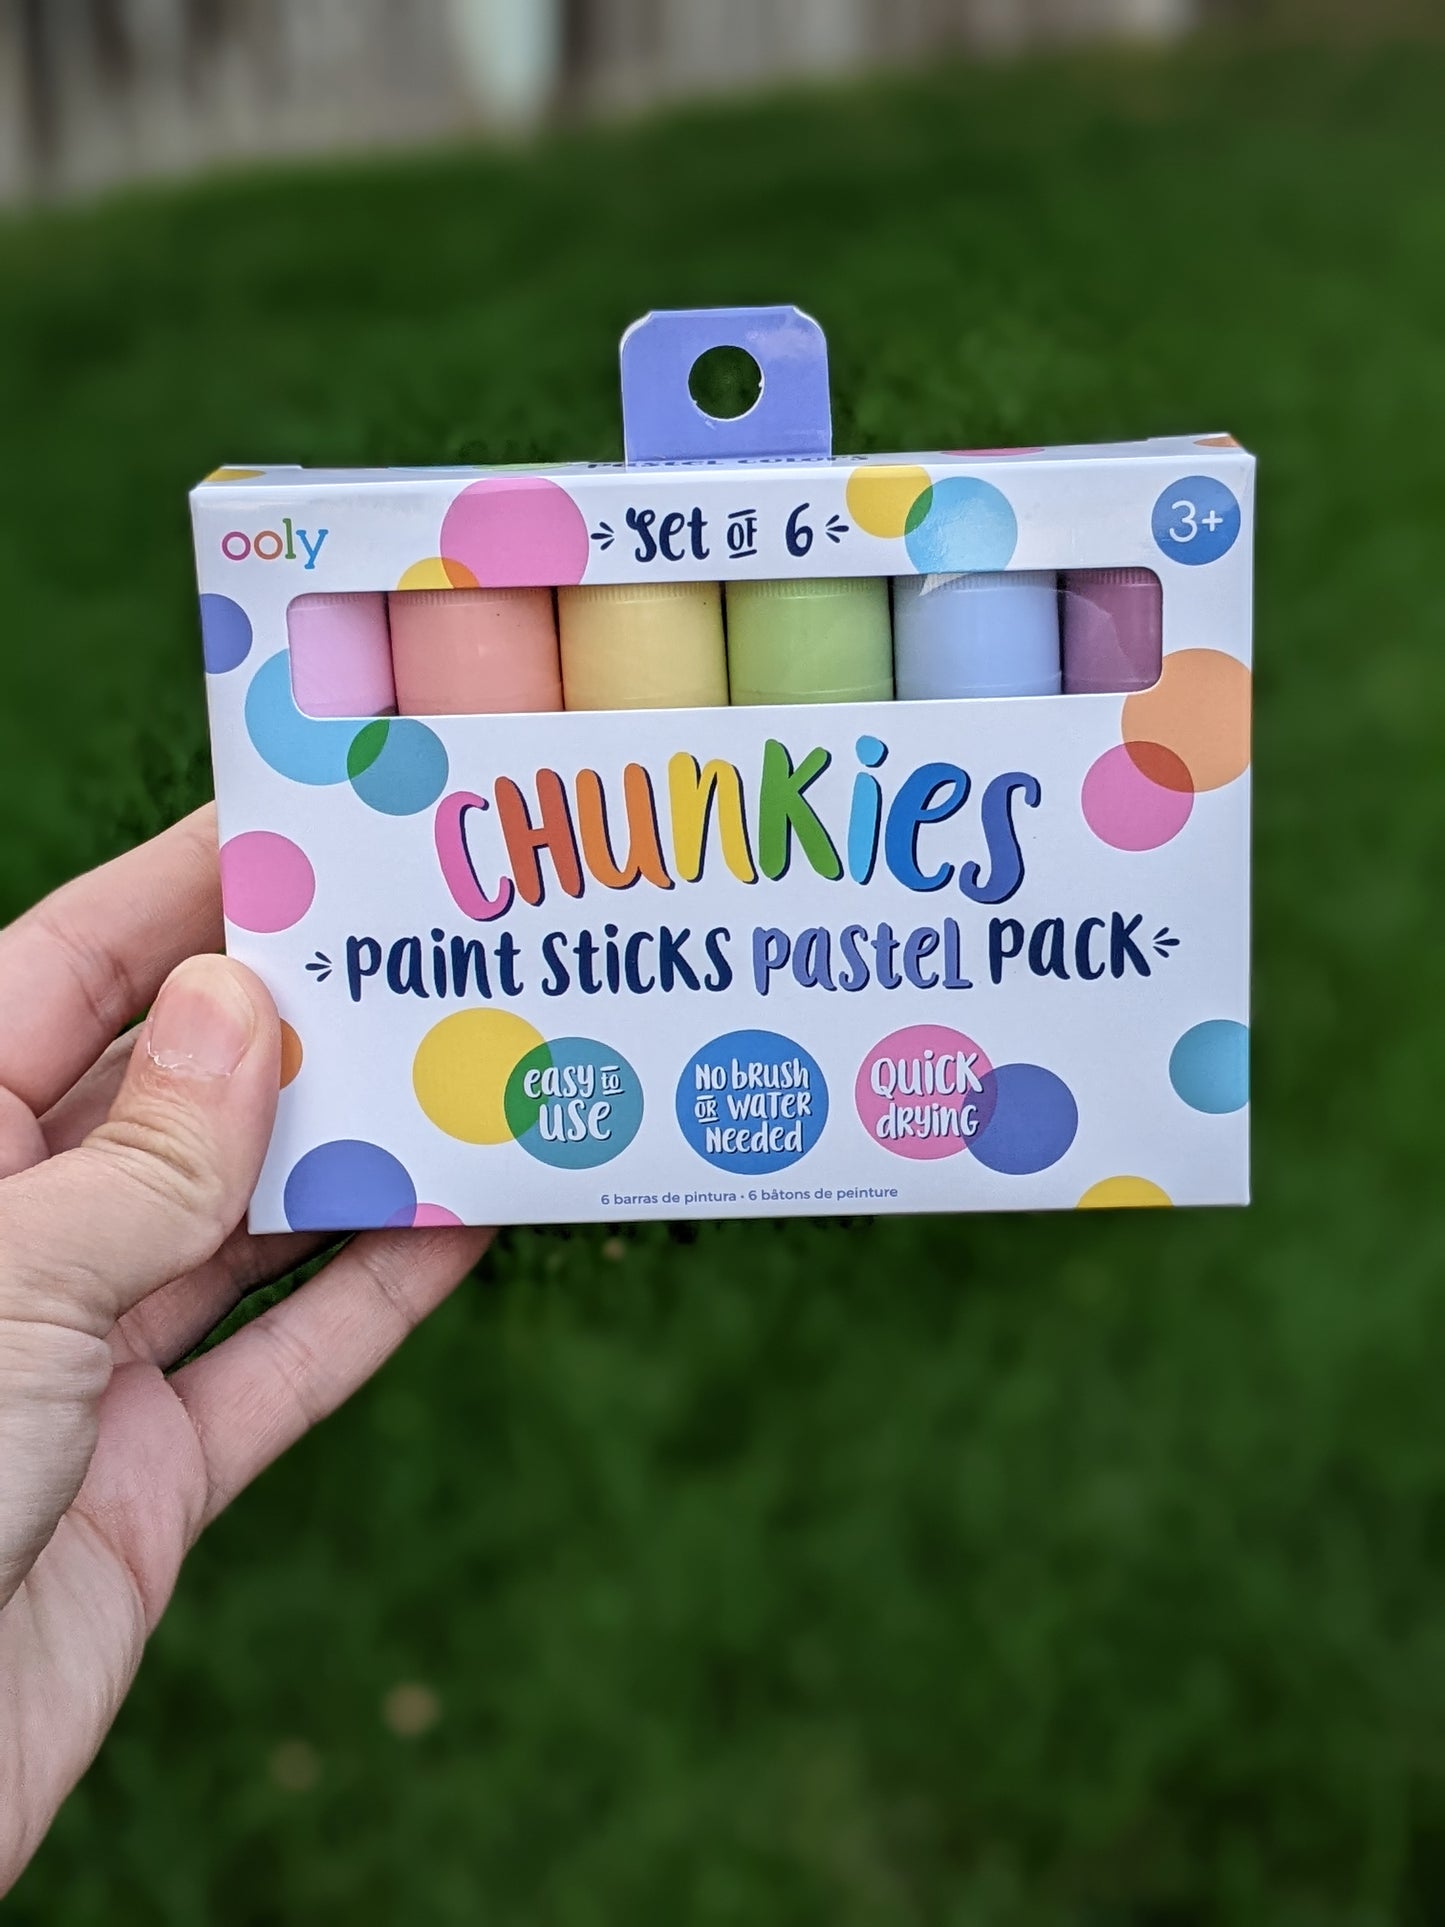 Chunkies paint sticks